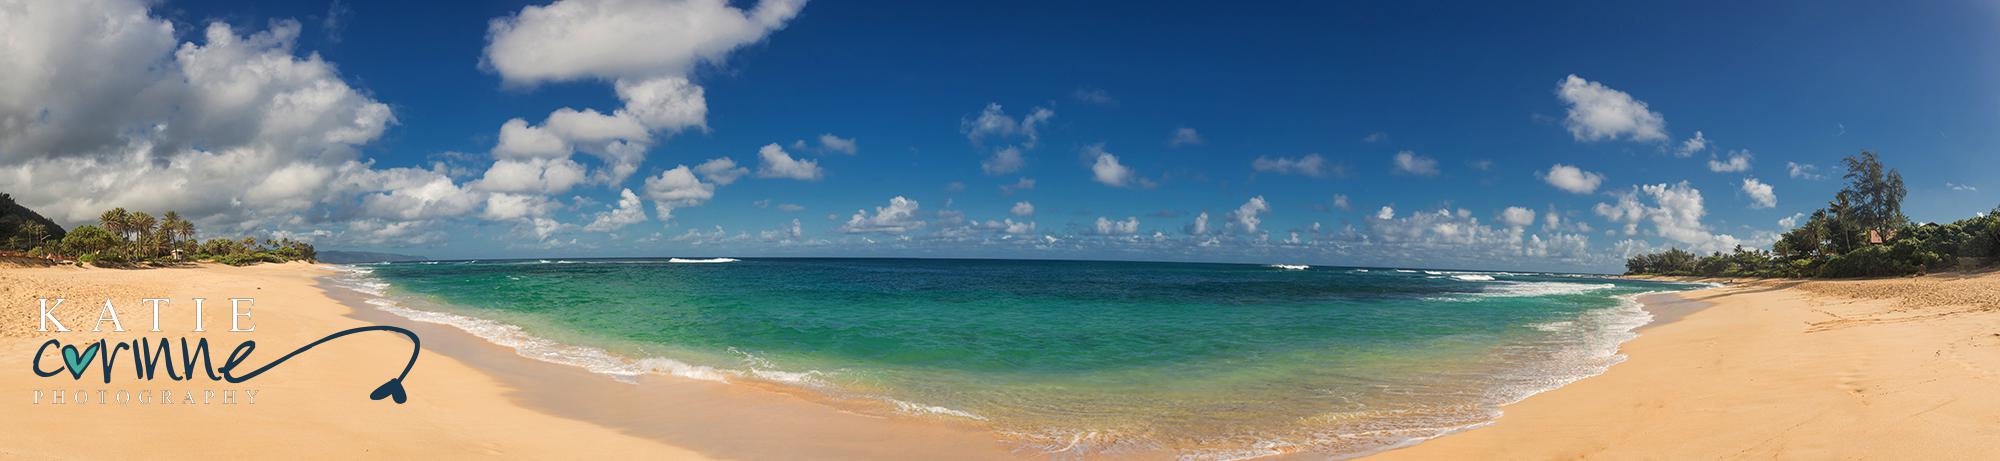 landscape photograph of hawaii beach